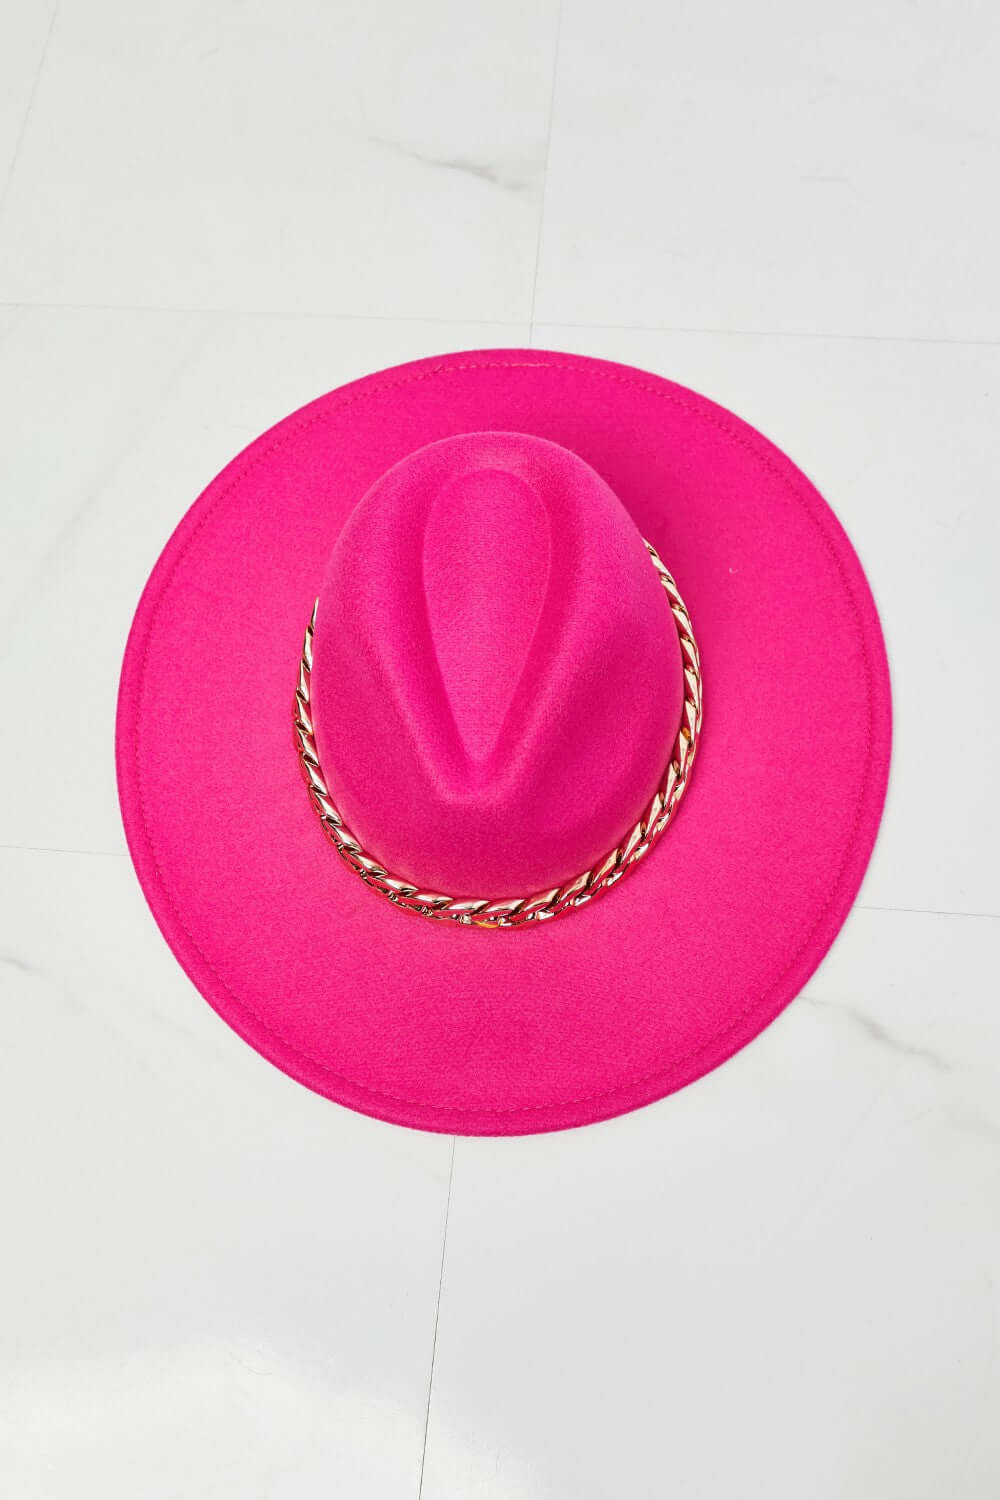 Fame Keep Your Promise Fedora Hat in Pink Trendy - Samslivos